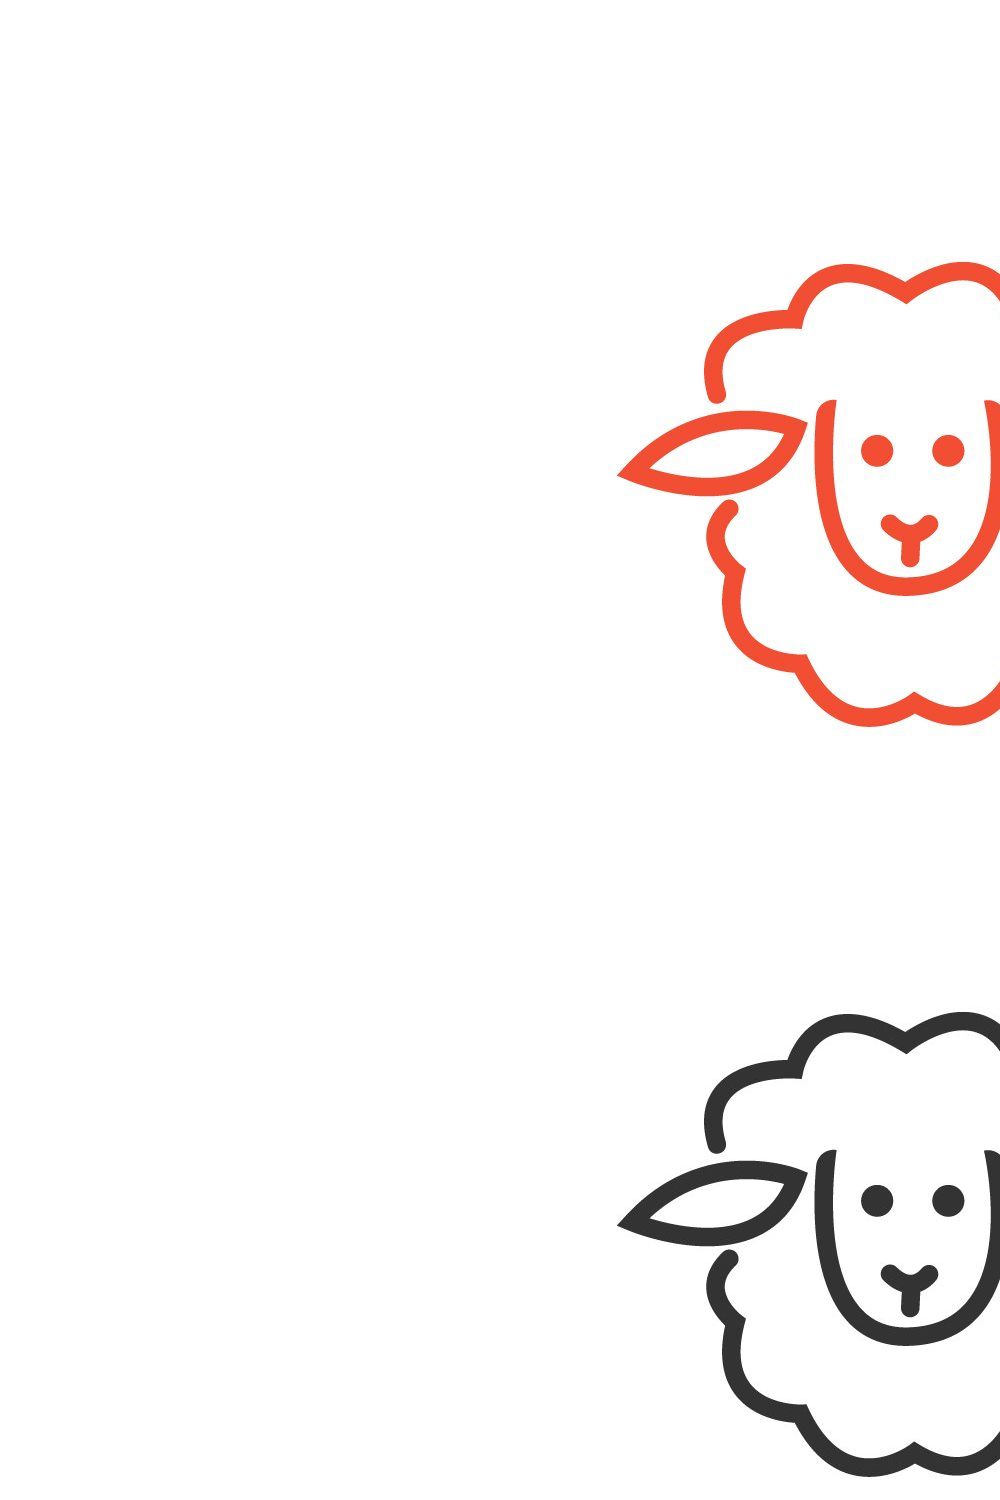 sheep logo pinterest preview image.